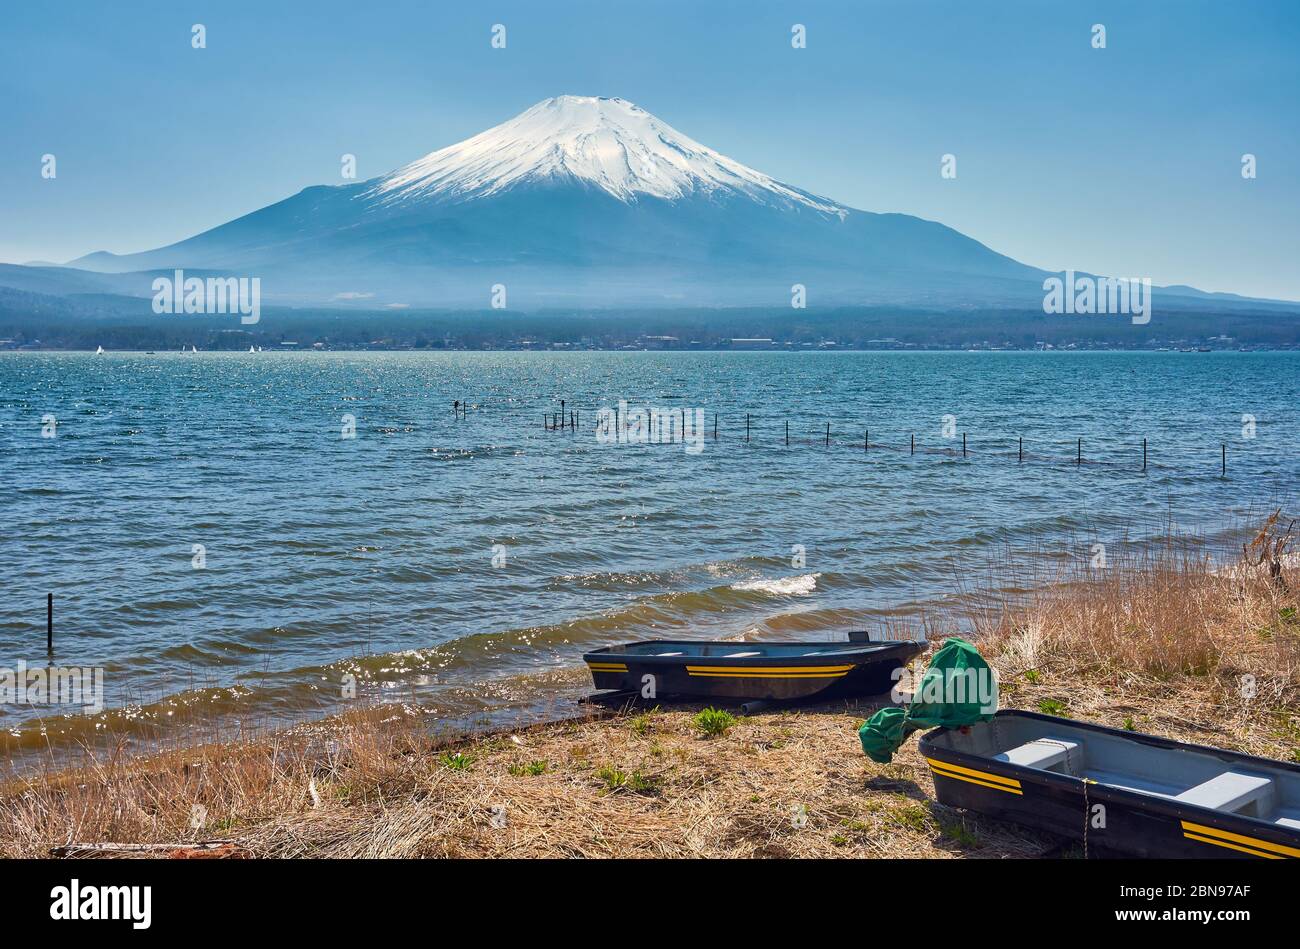 Iconic view of Lake Yamanaka and Mt. Fuji in the background, Yamanashi Prefecture, Japan Stock Photo